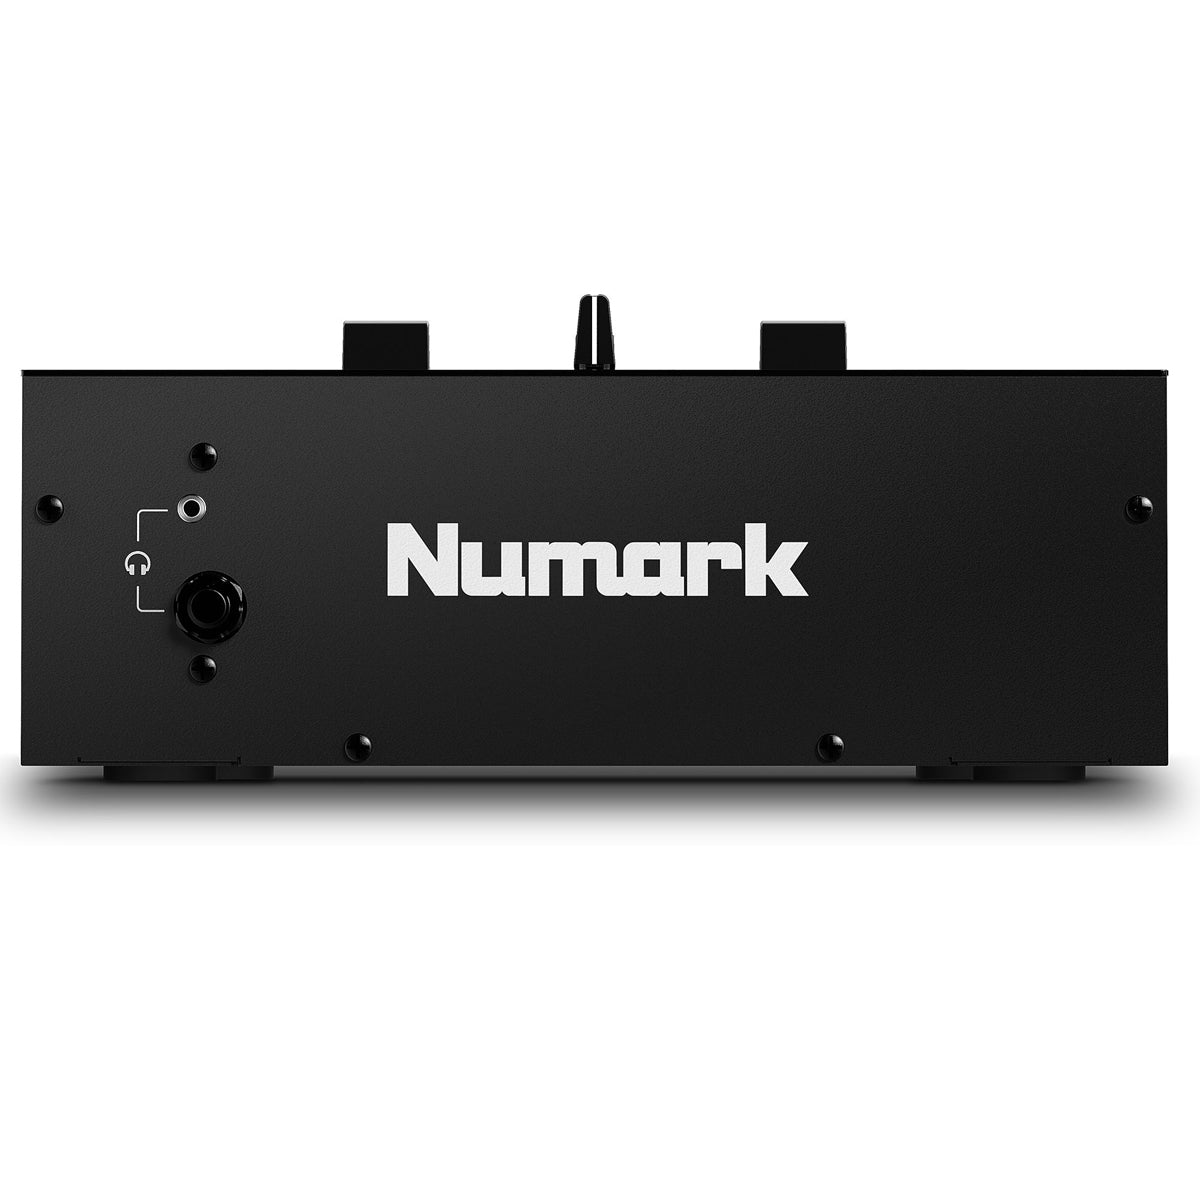 Numark Scratch Pro Battle Mixer with DVS Support